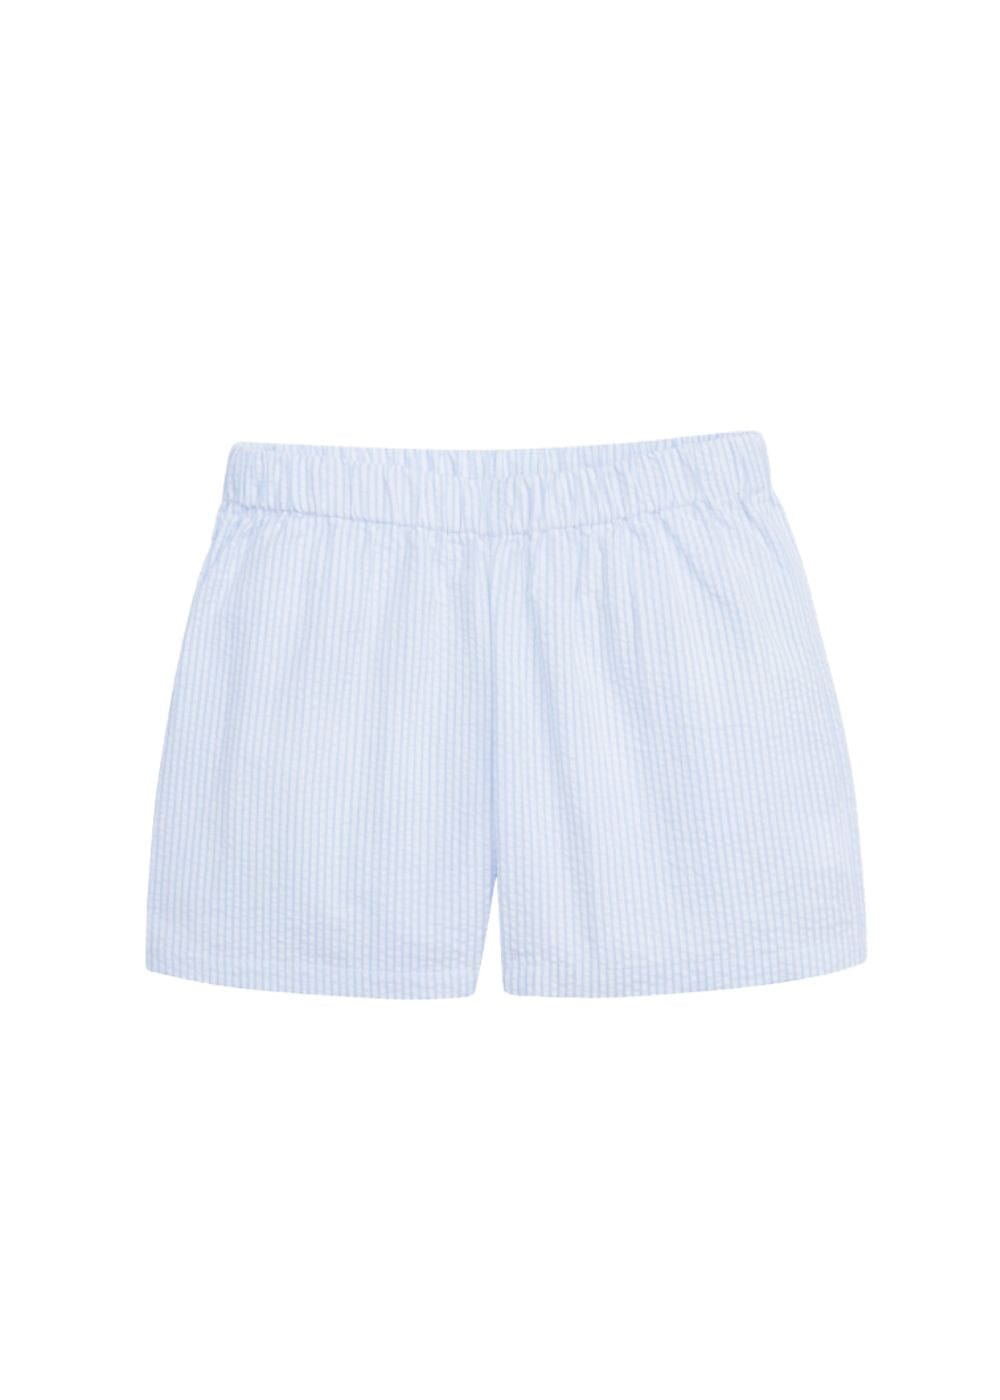 seguridadindustrialcr boy's elastic waist shorts, light blue seersucker stripe for spriing